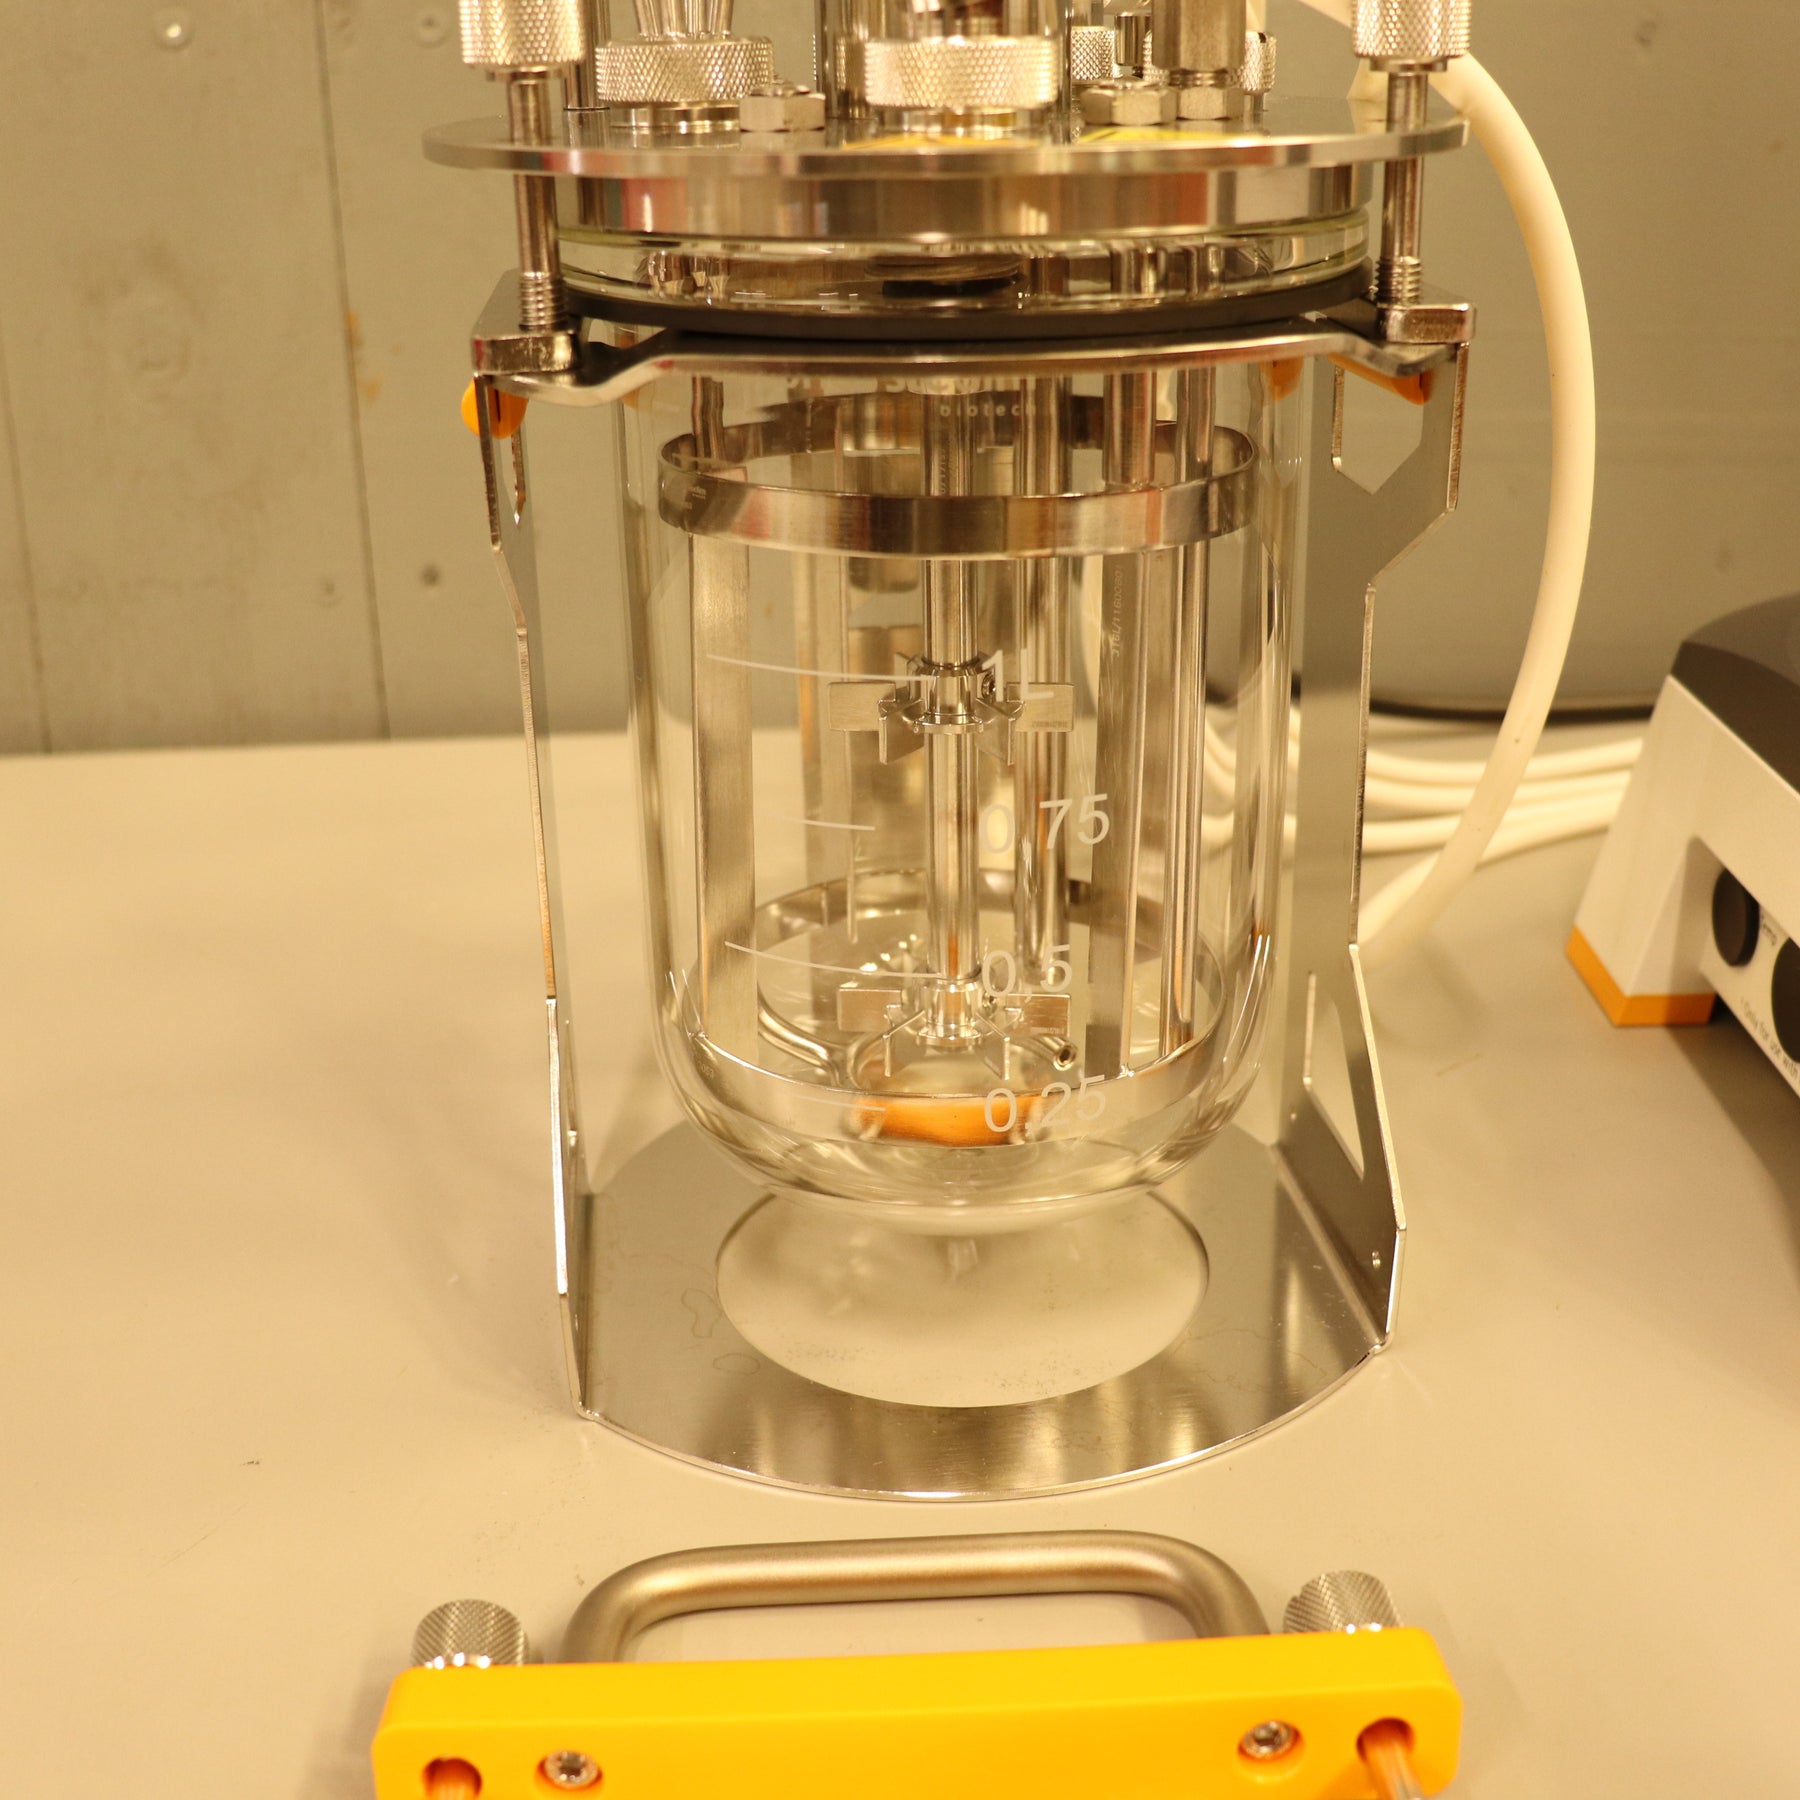 Sartorius BioStat A Bioreactor Controller System w/ 1L Vessel